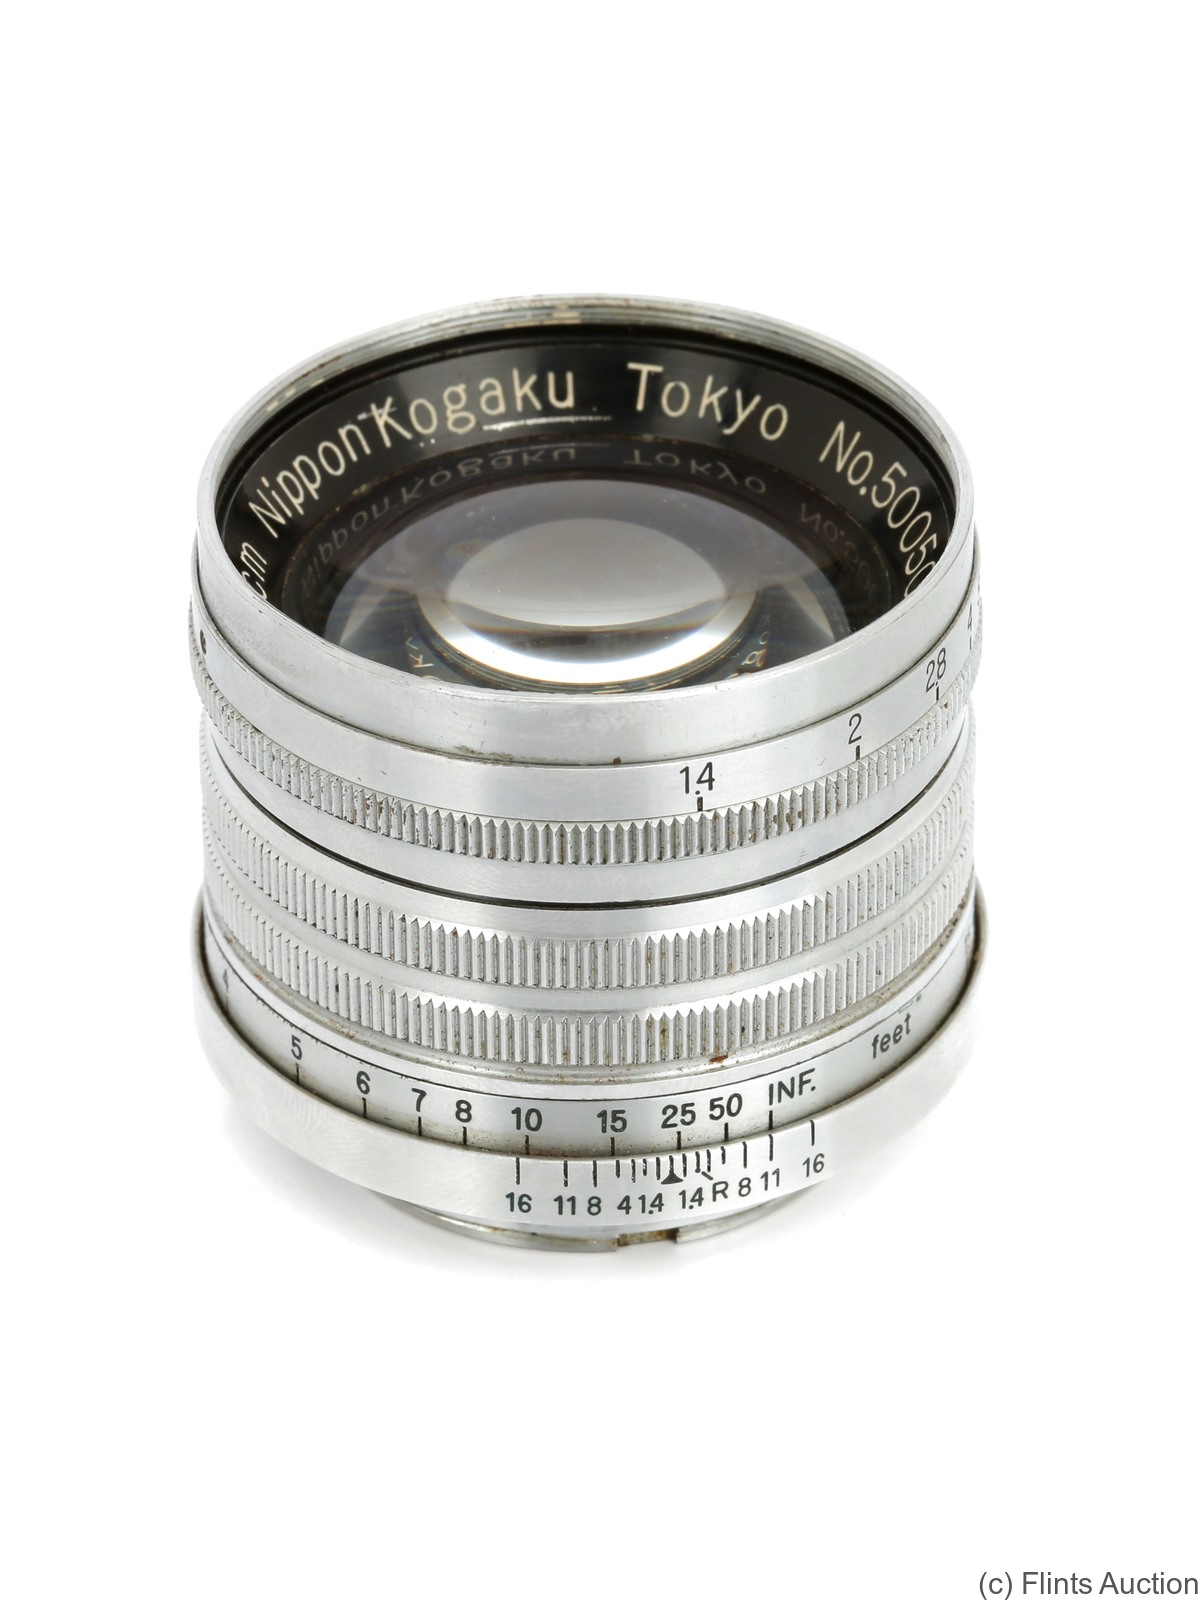 Nikon: 50mm (5cm) f1.4 Nikkor-S.C (M39, chrome) camera